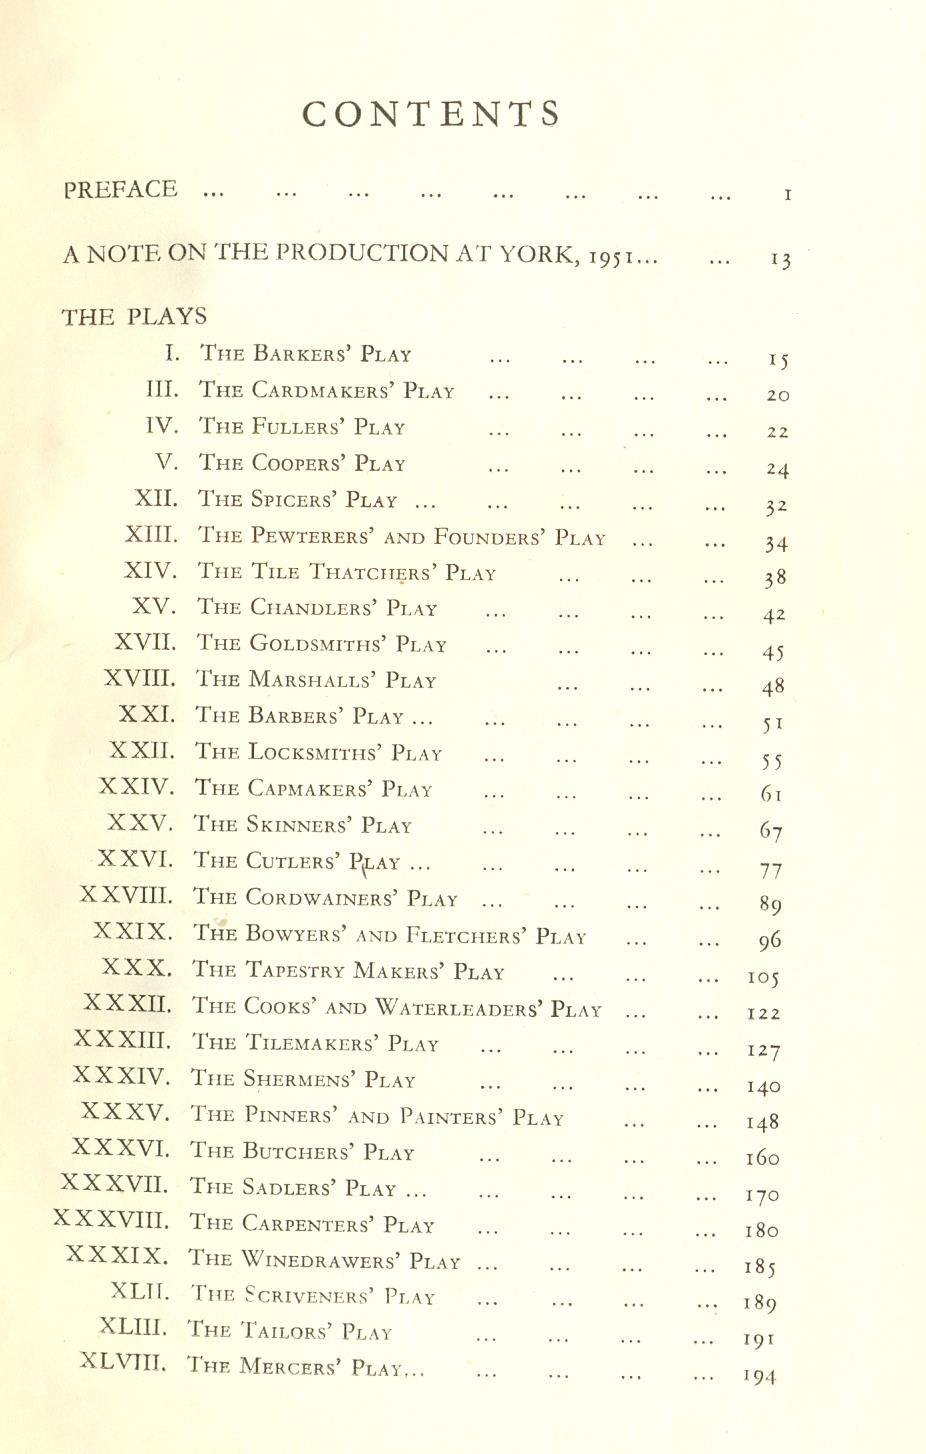 1951 book Contents